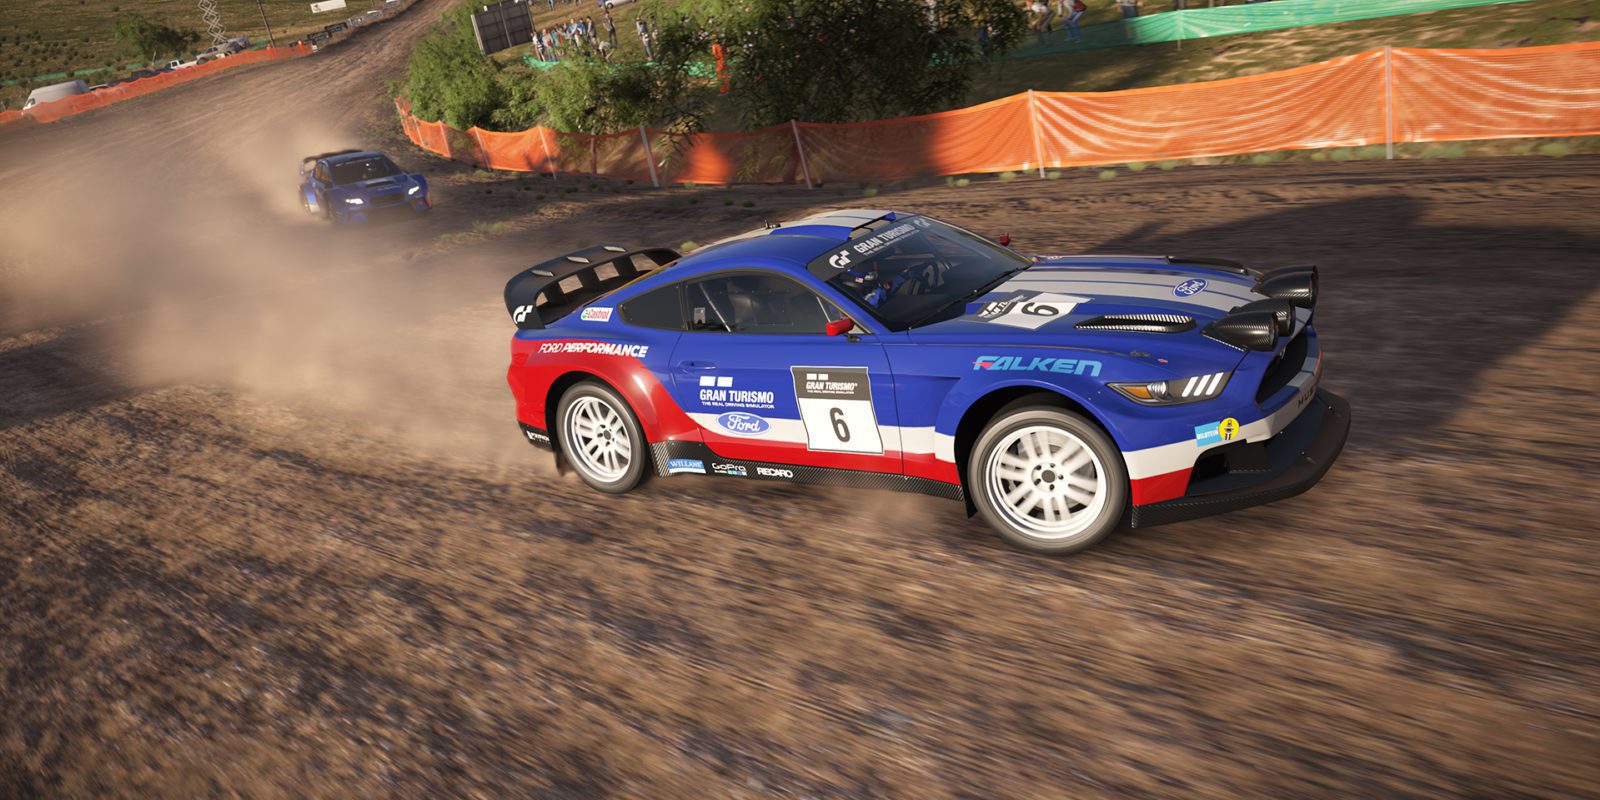 Comparativa de sonido: 'Gran Turismo Sport' vs. 'Forza Motorsport 6'